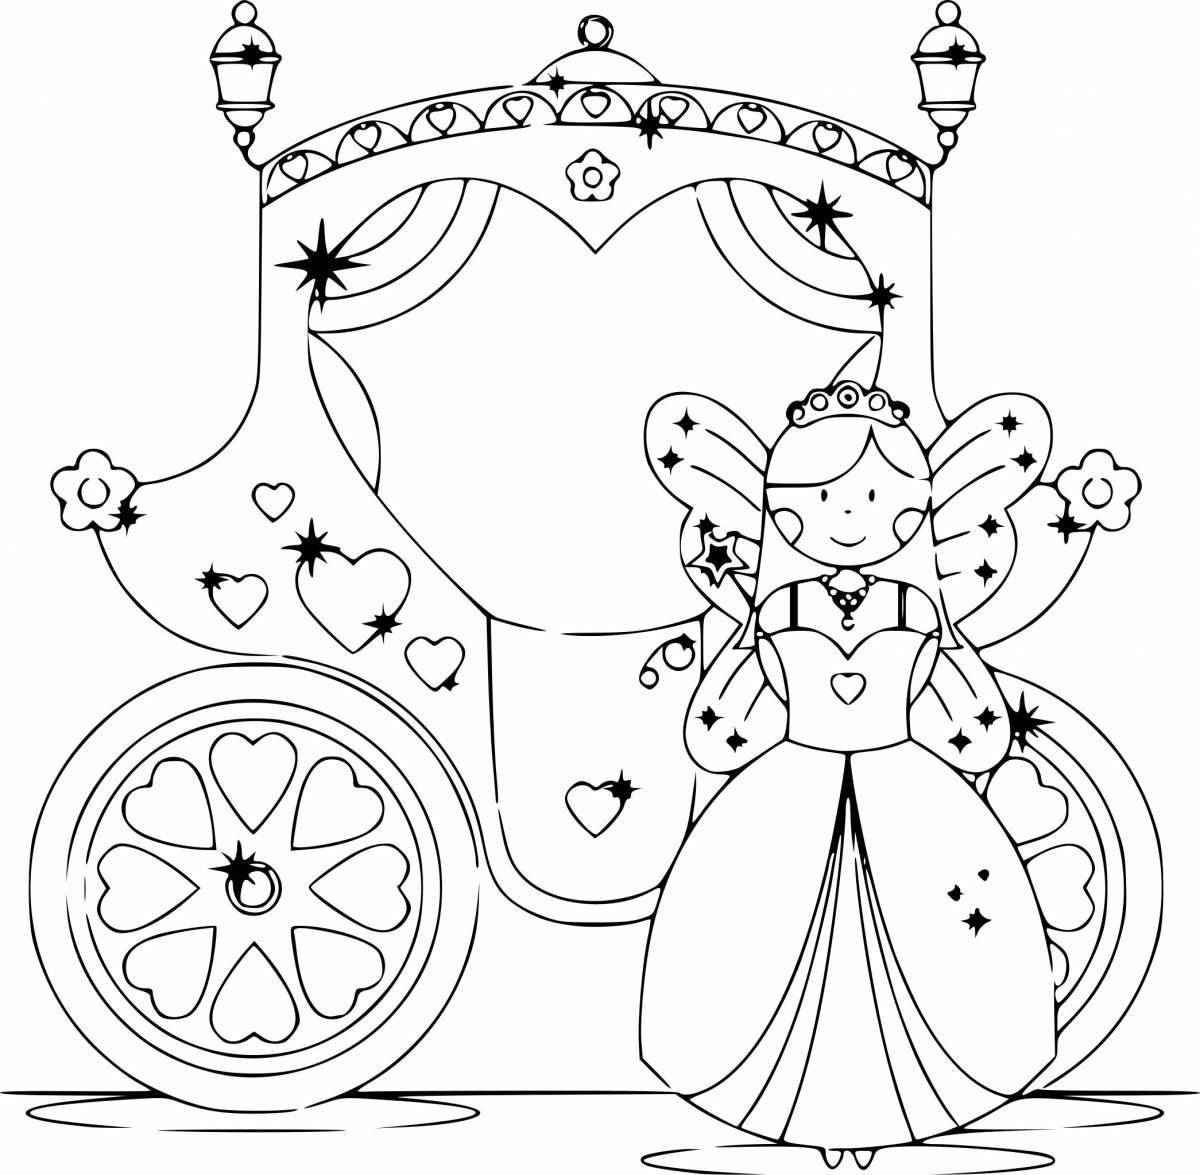 Cinderella's royal carriage coloring page